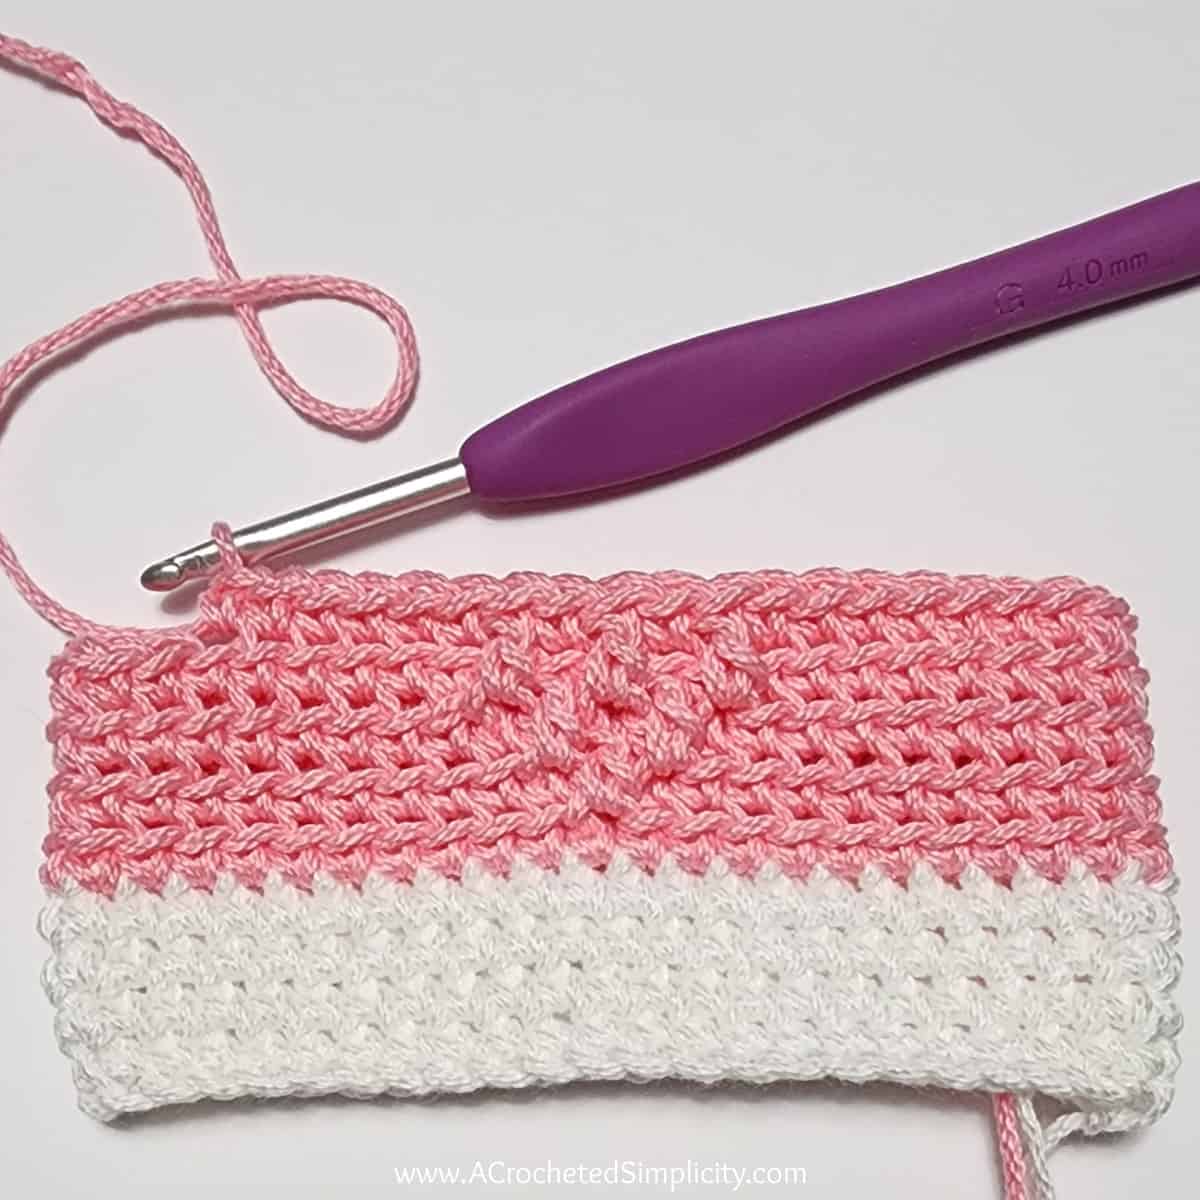 Crochet Valentine's treat bag tutorial showing round 3 complete.